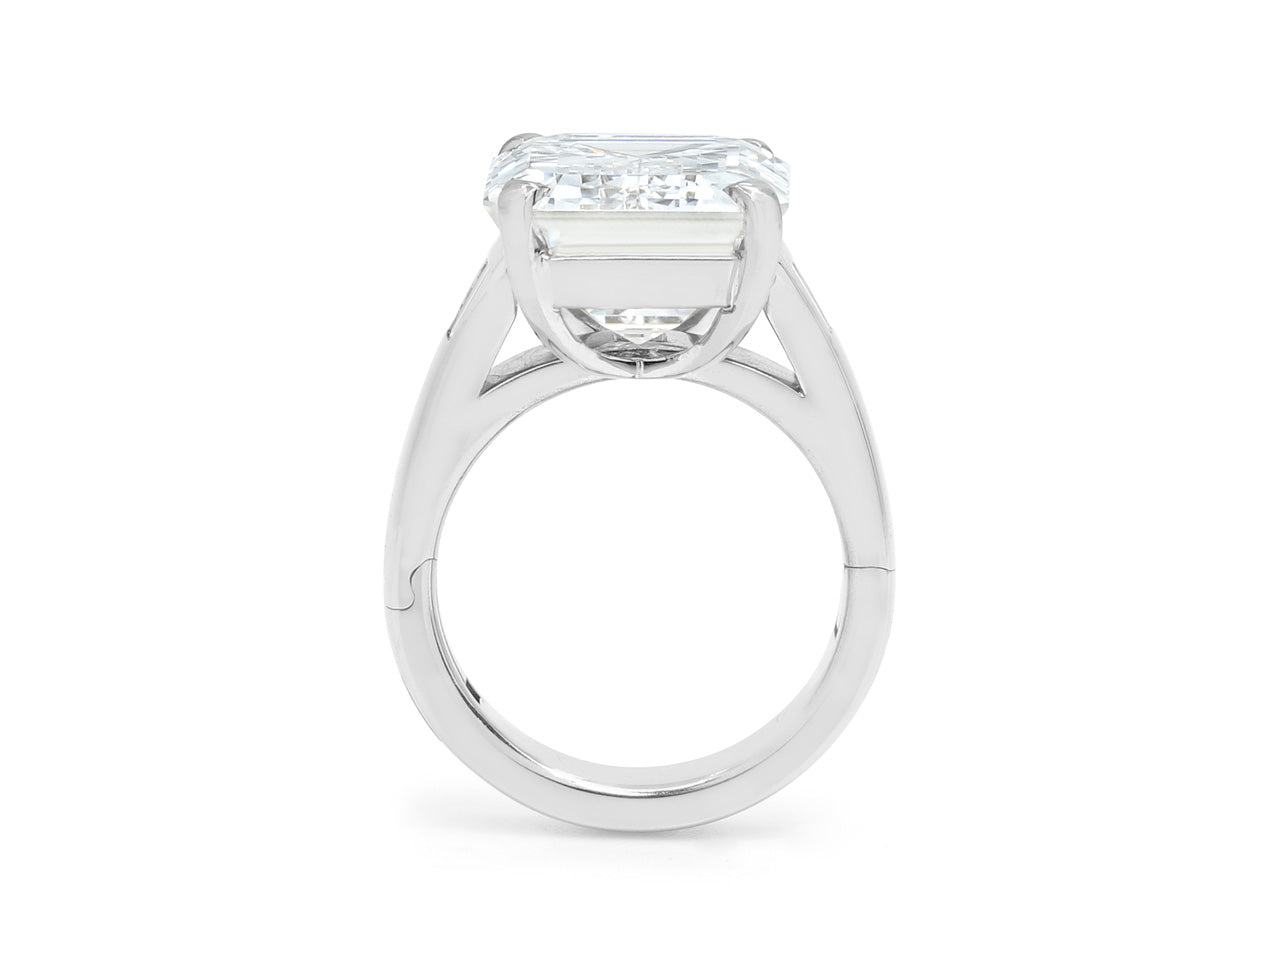 Emerald Cut Diamond Ring, 9.08 carat G/VS2, in 18K White Gold